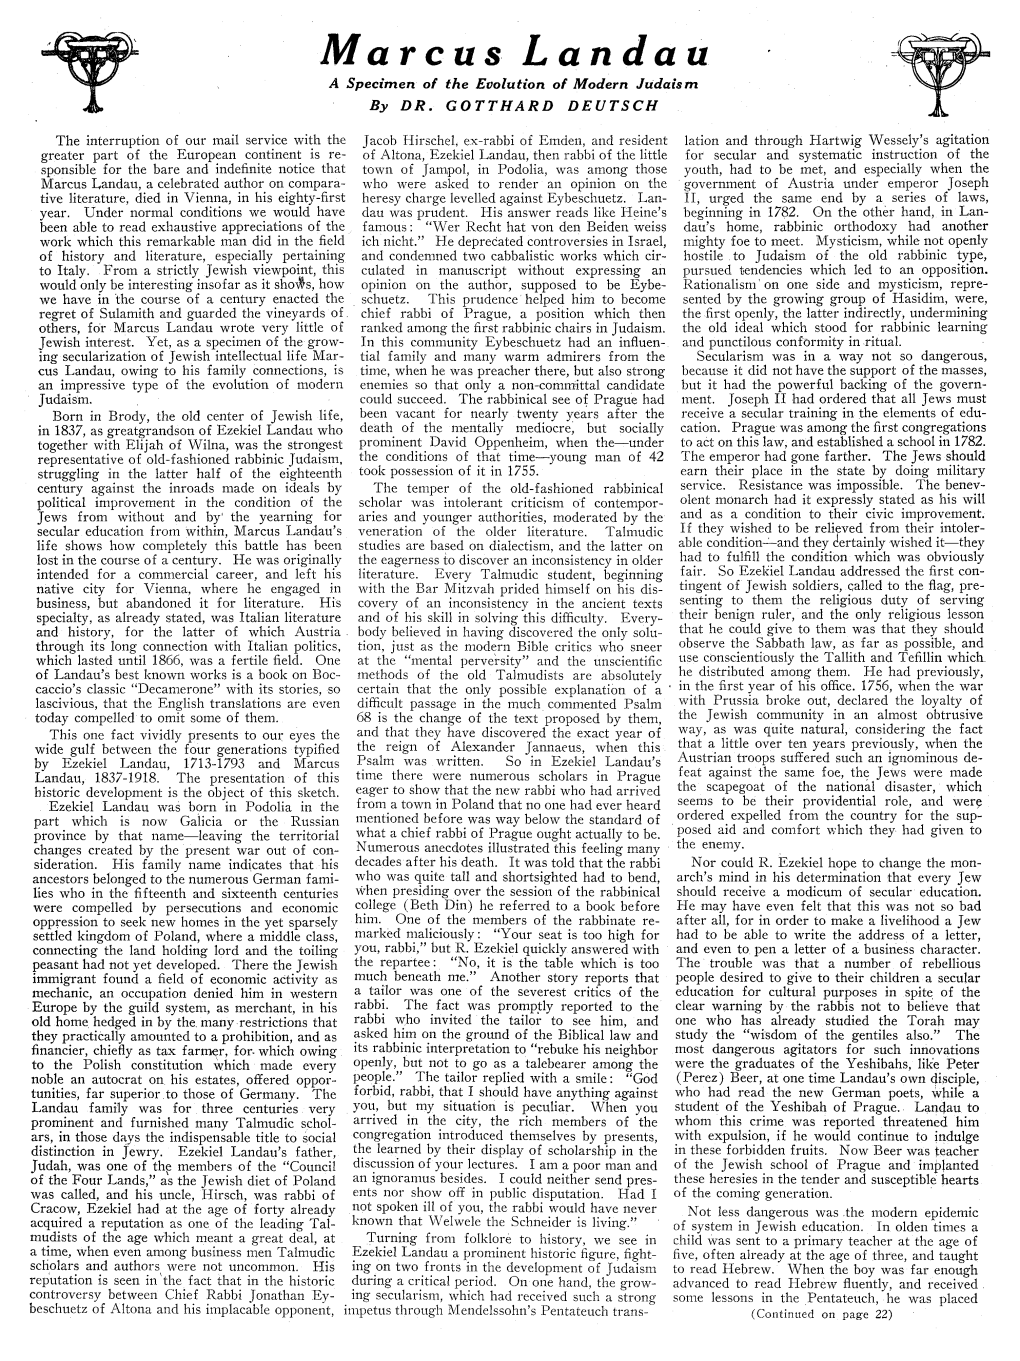 Volume 30, Issue 2 (The Sentinel, 1911